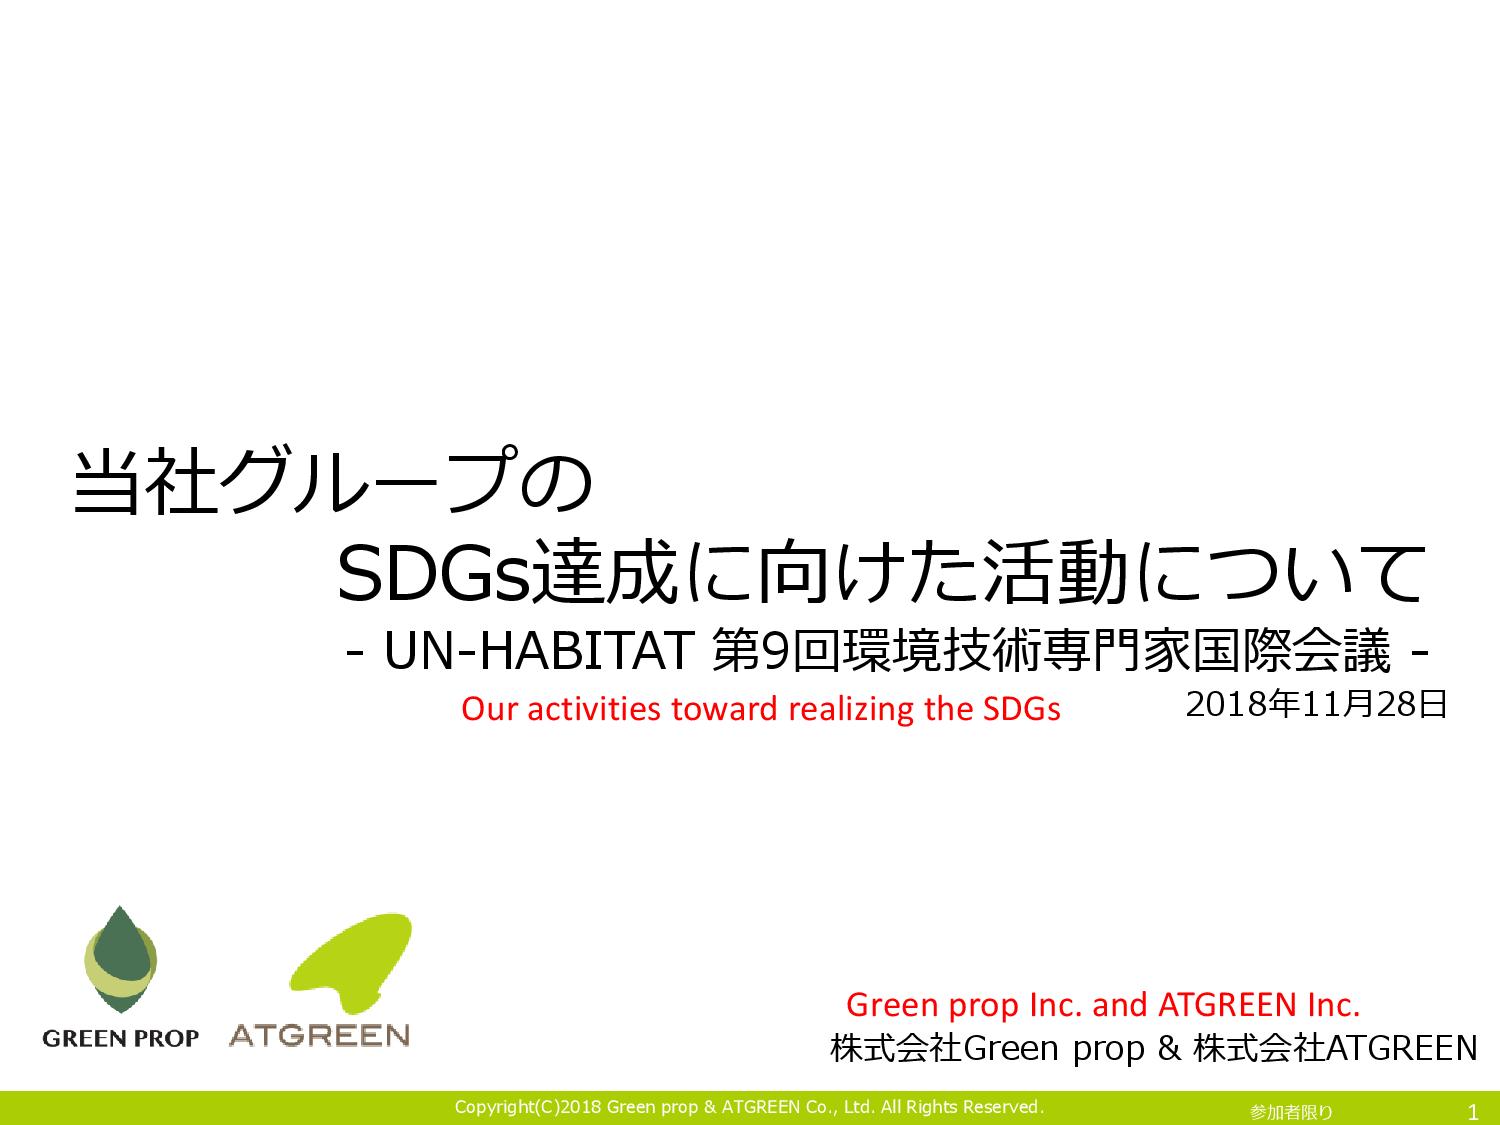 Green prop Inc. and ATGREEN Inc., – Our activities toward realising the SDGs / SDGs 達成に向けた活動：Expert Group Meetings 2018